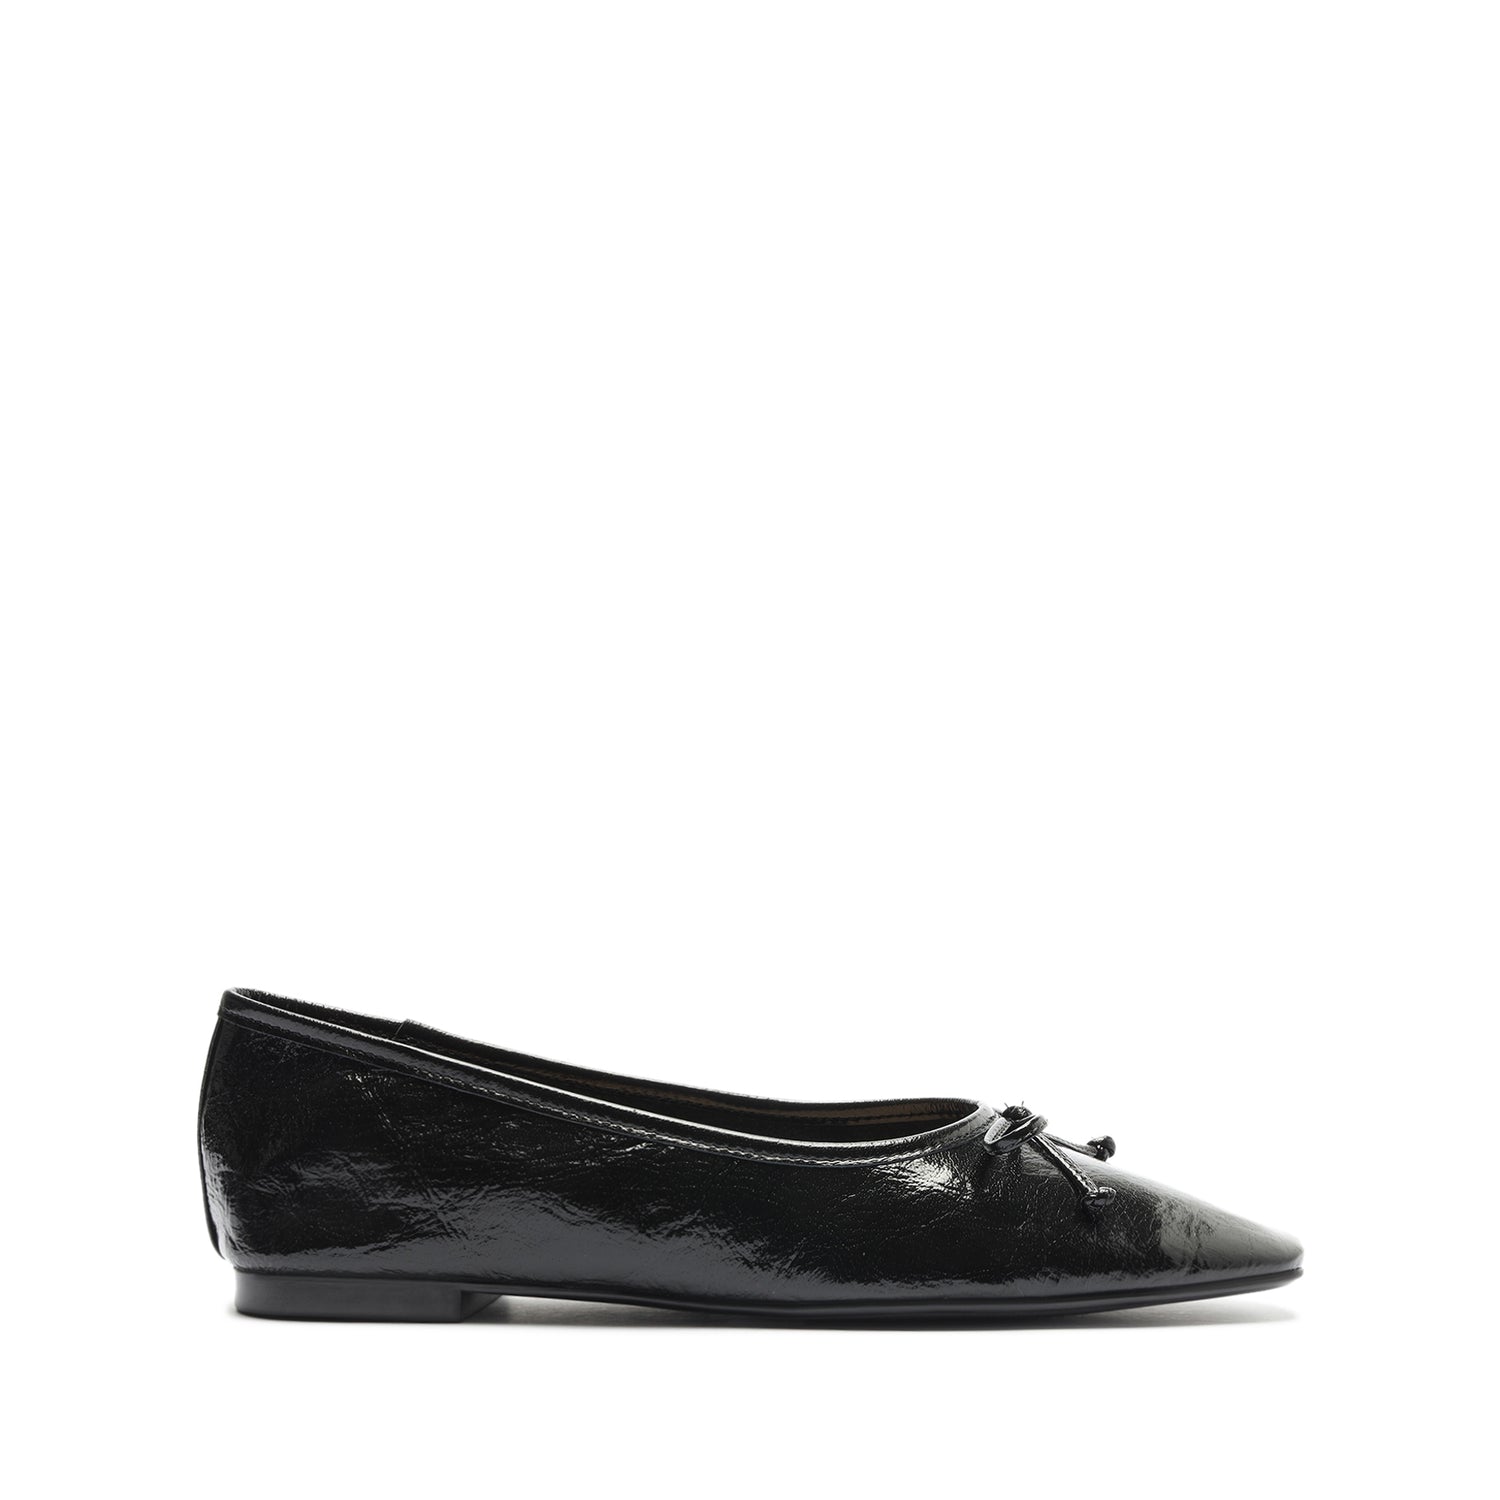 Arissa Flats FALL 23 5 Black Patent Leather - Schutz Shoes